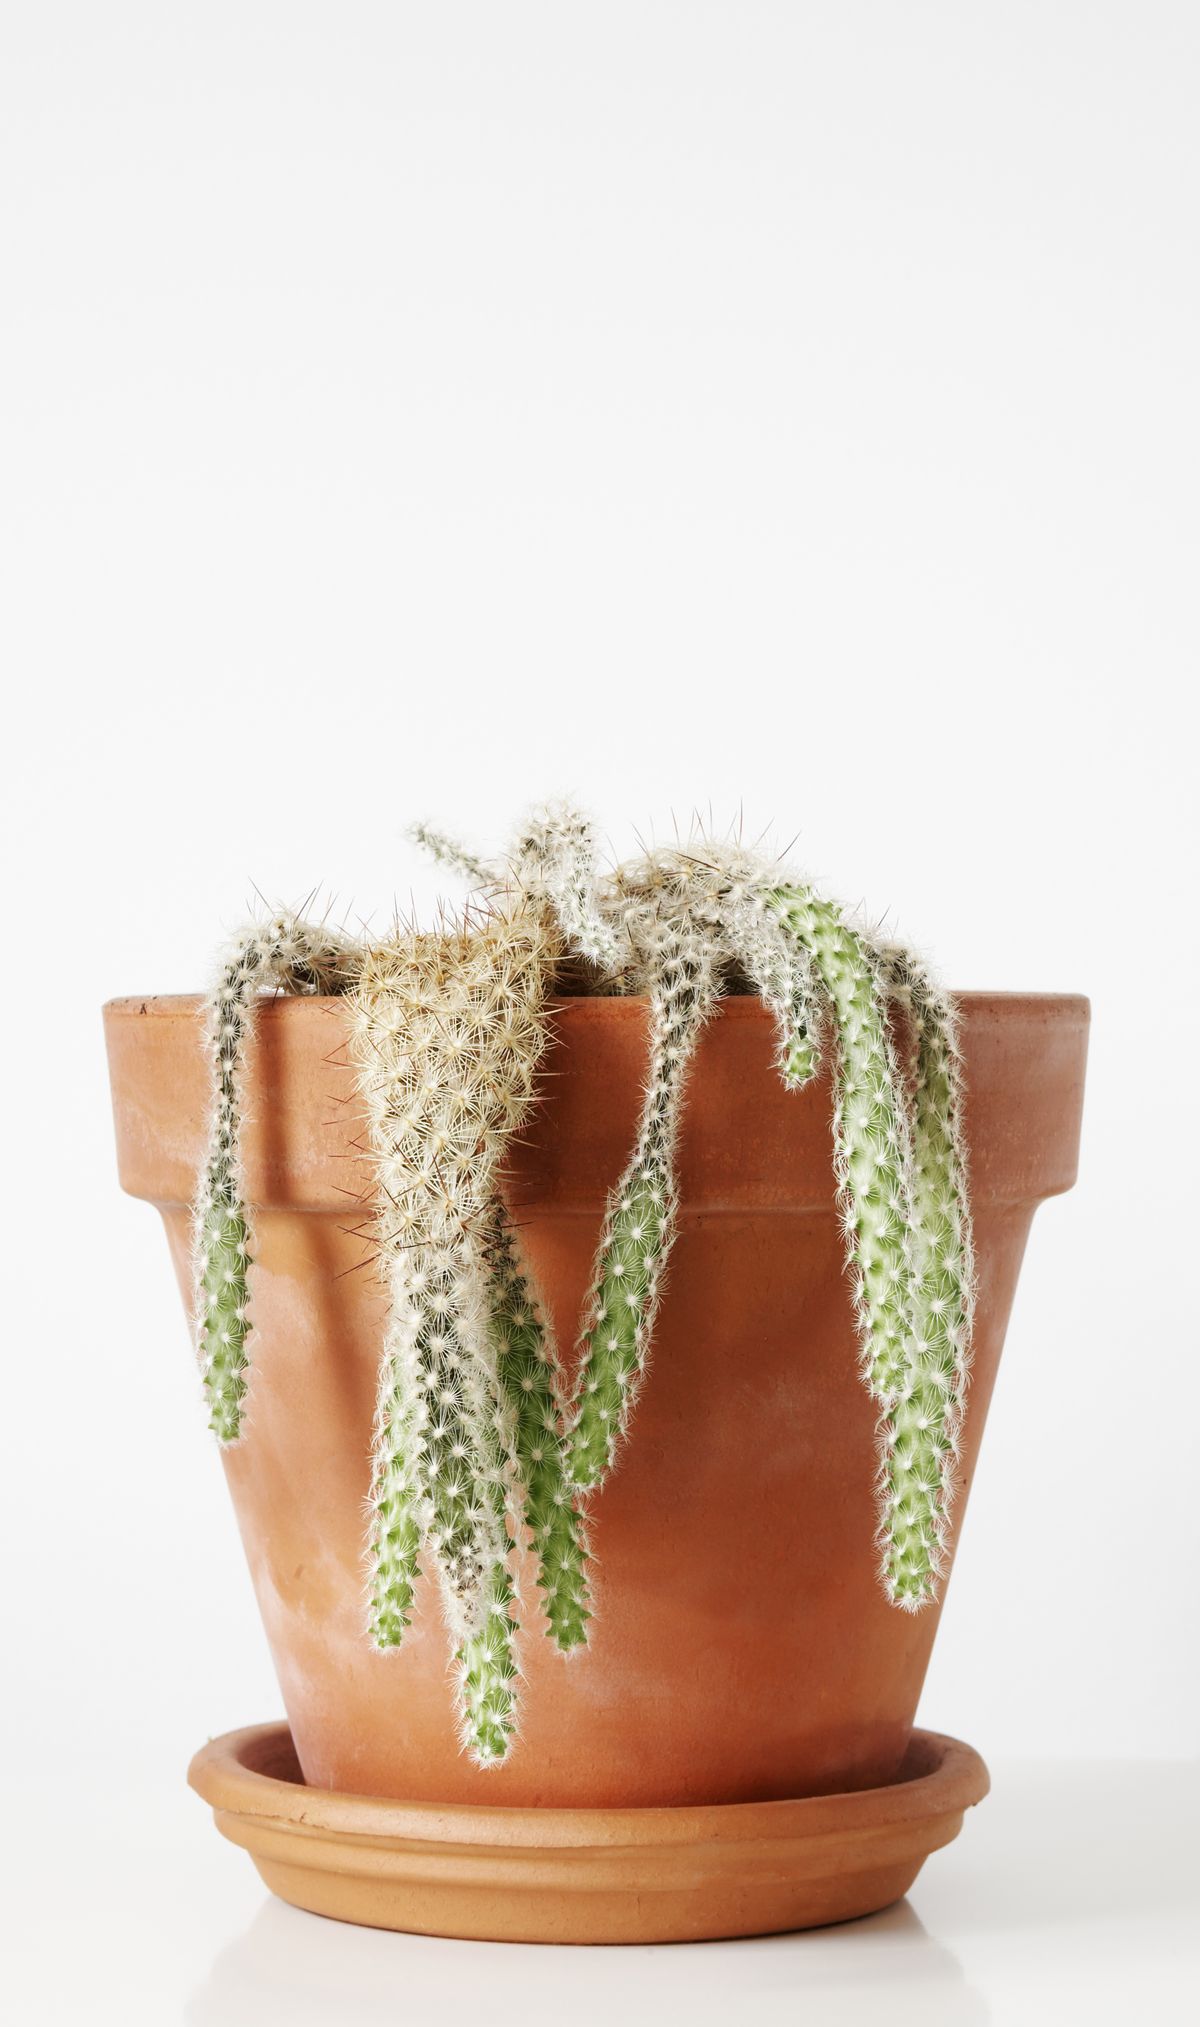 dead cactus in flower pot